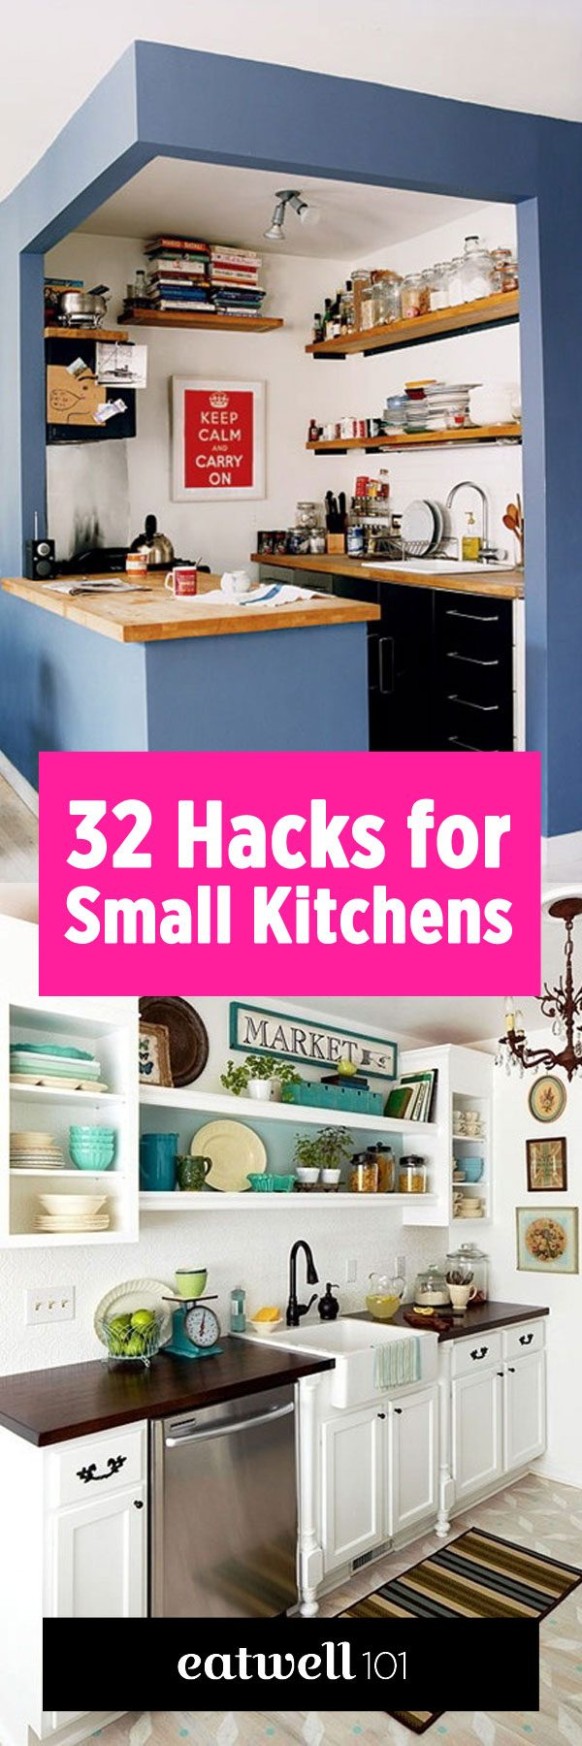 10 Brilliant Hacks to Make A Small Kitchen Look Bigger — Eatwell10 - how do you make a small kitchen look bigger?